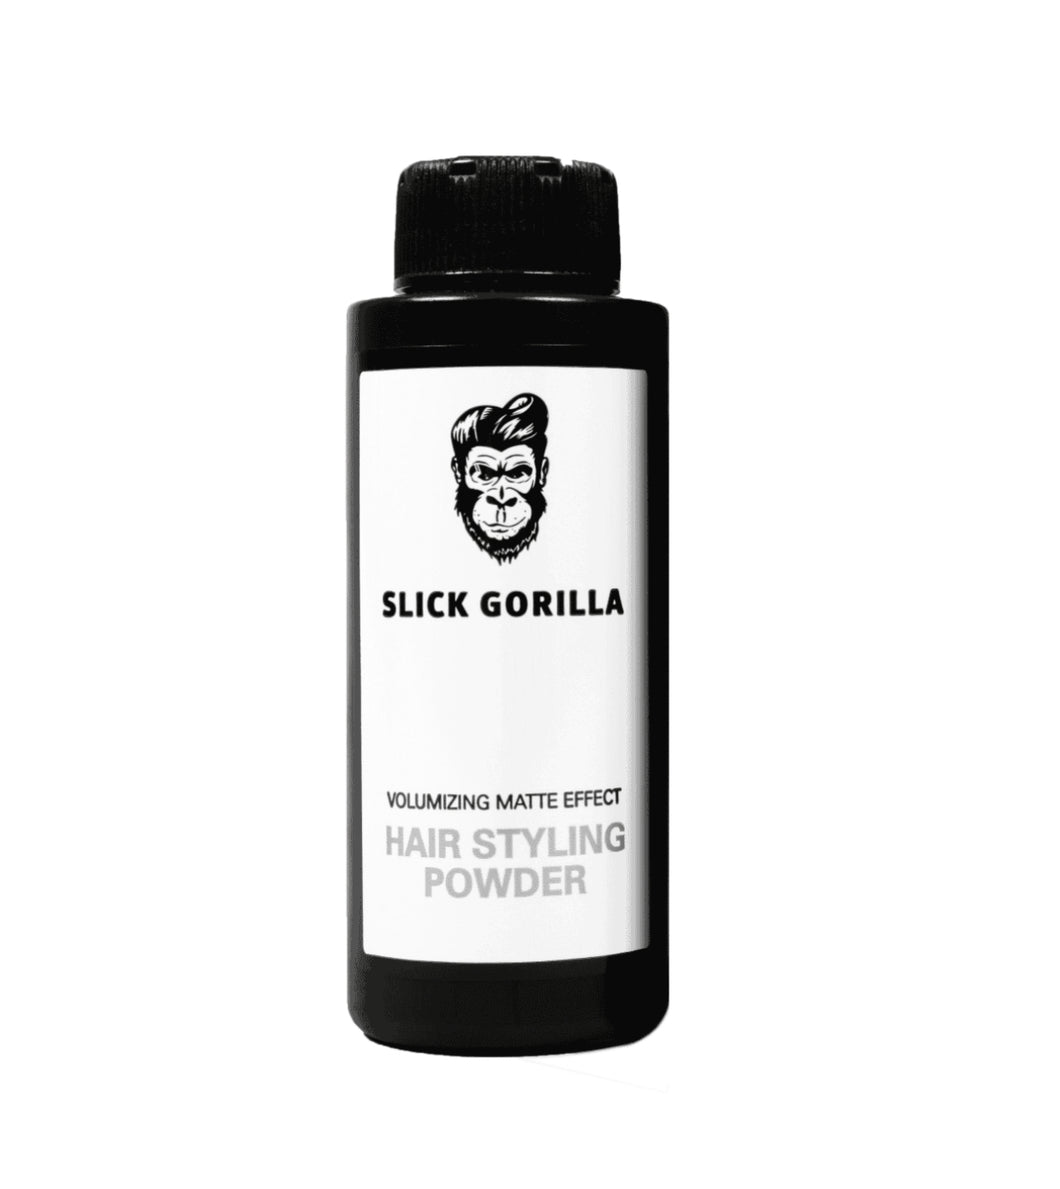 Slick Gorilla powder